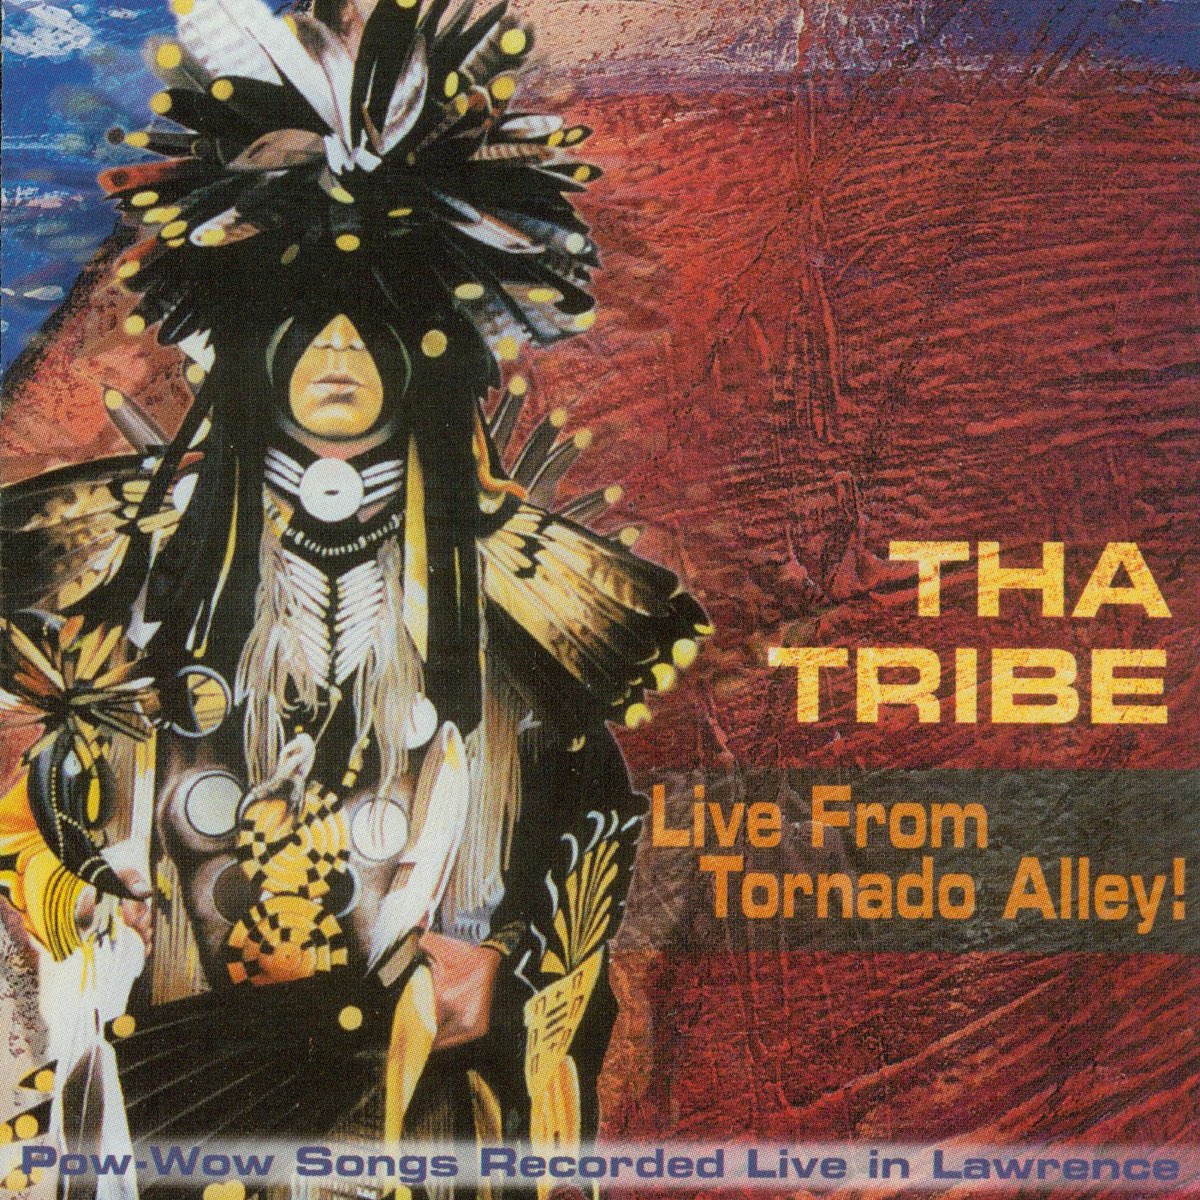 Песня tribes. Песня wow wow. Wow wow wow песня. Live with Tribe!.